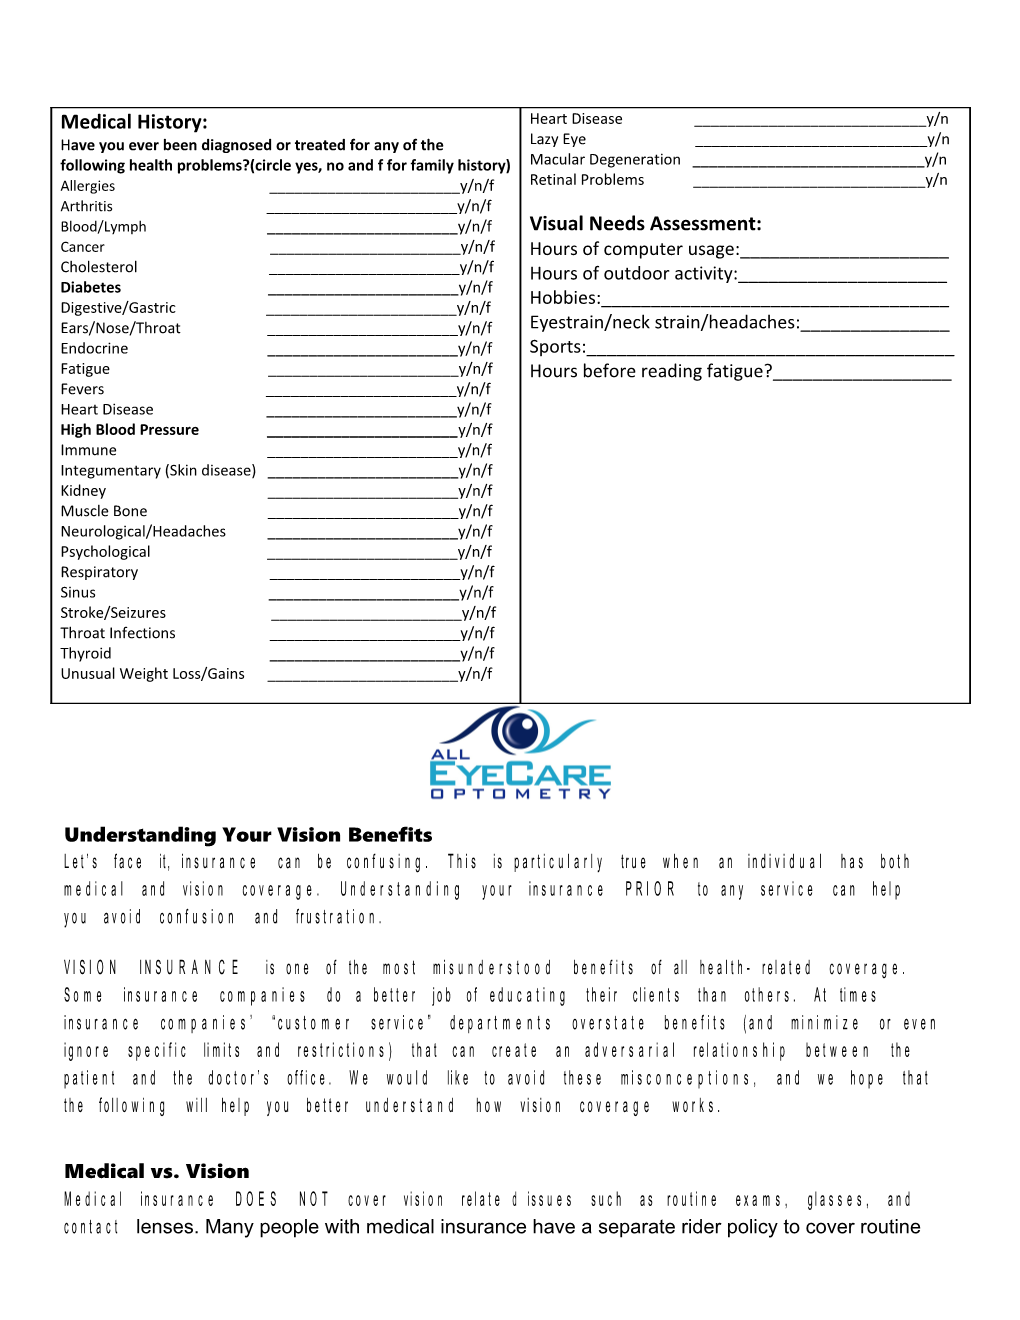 Patient Registration: All Eyecare Optometry Intake Form